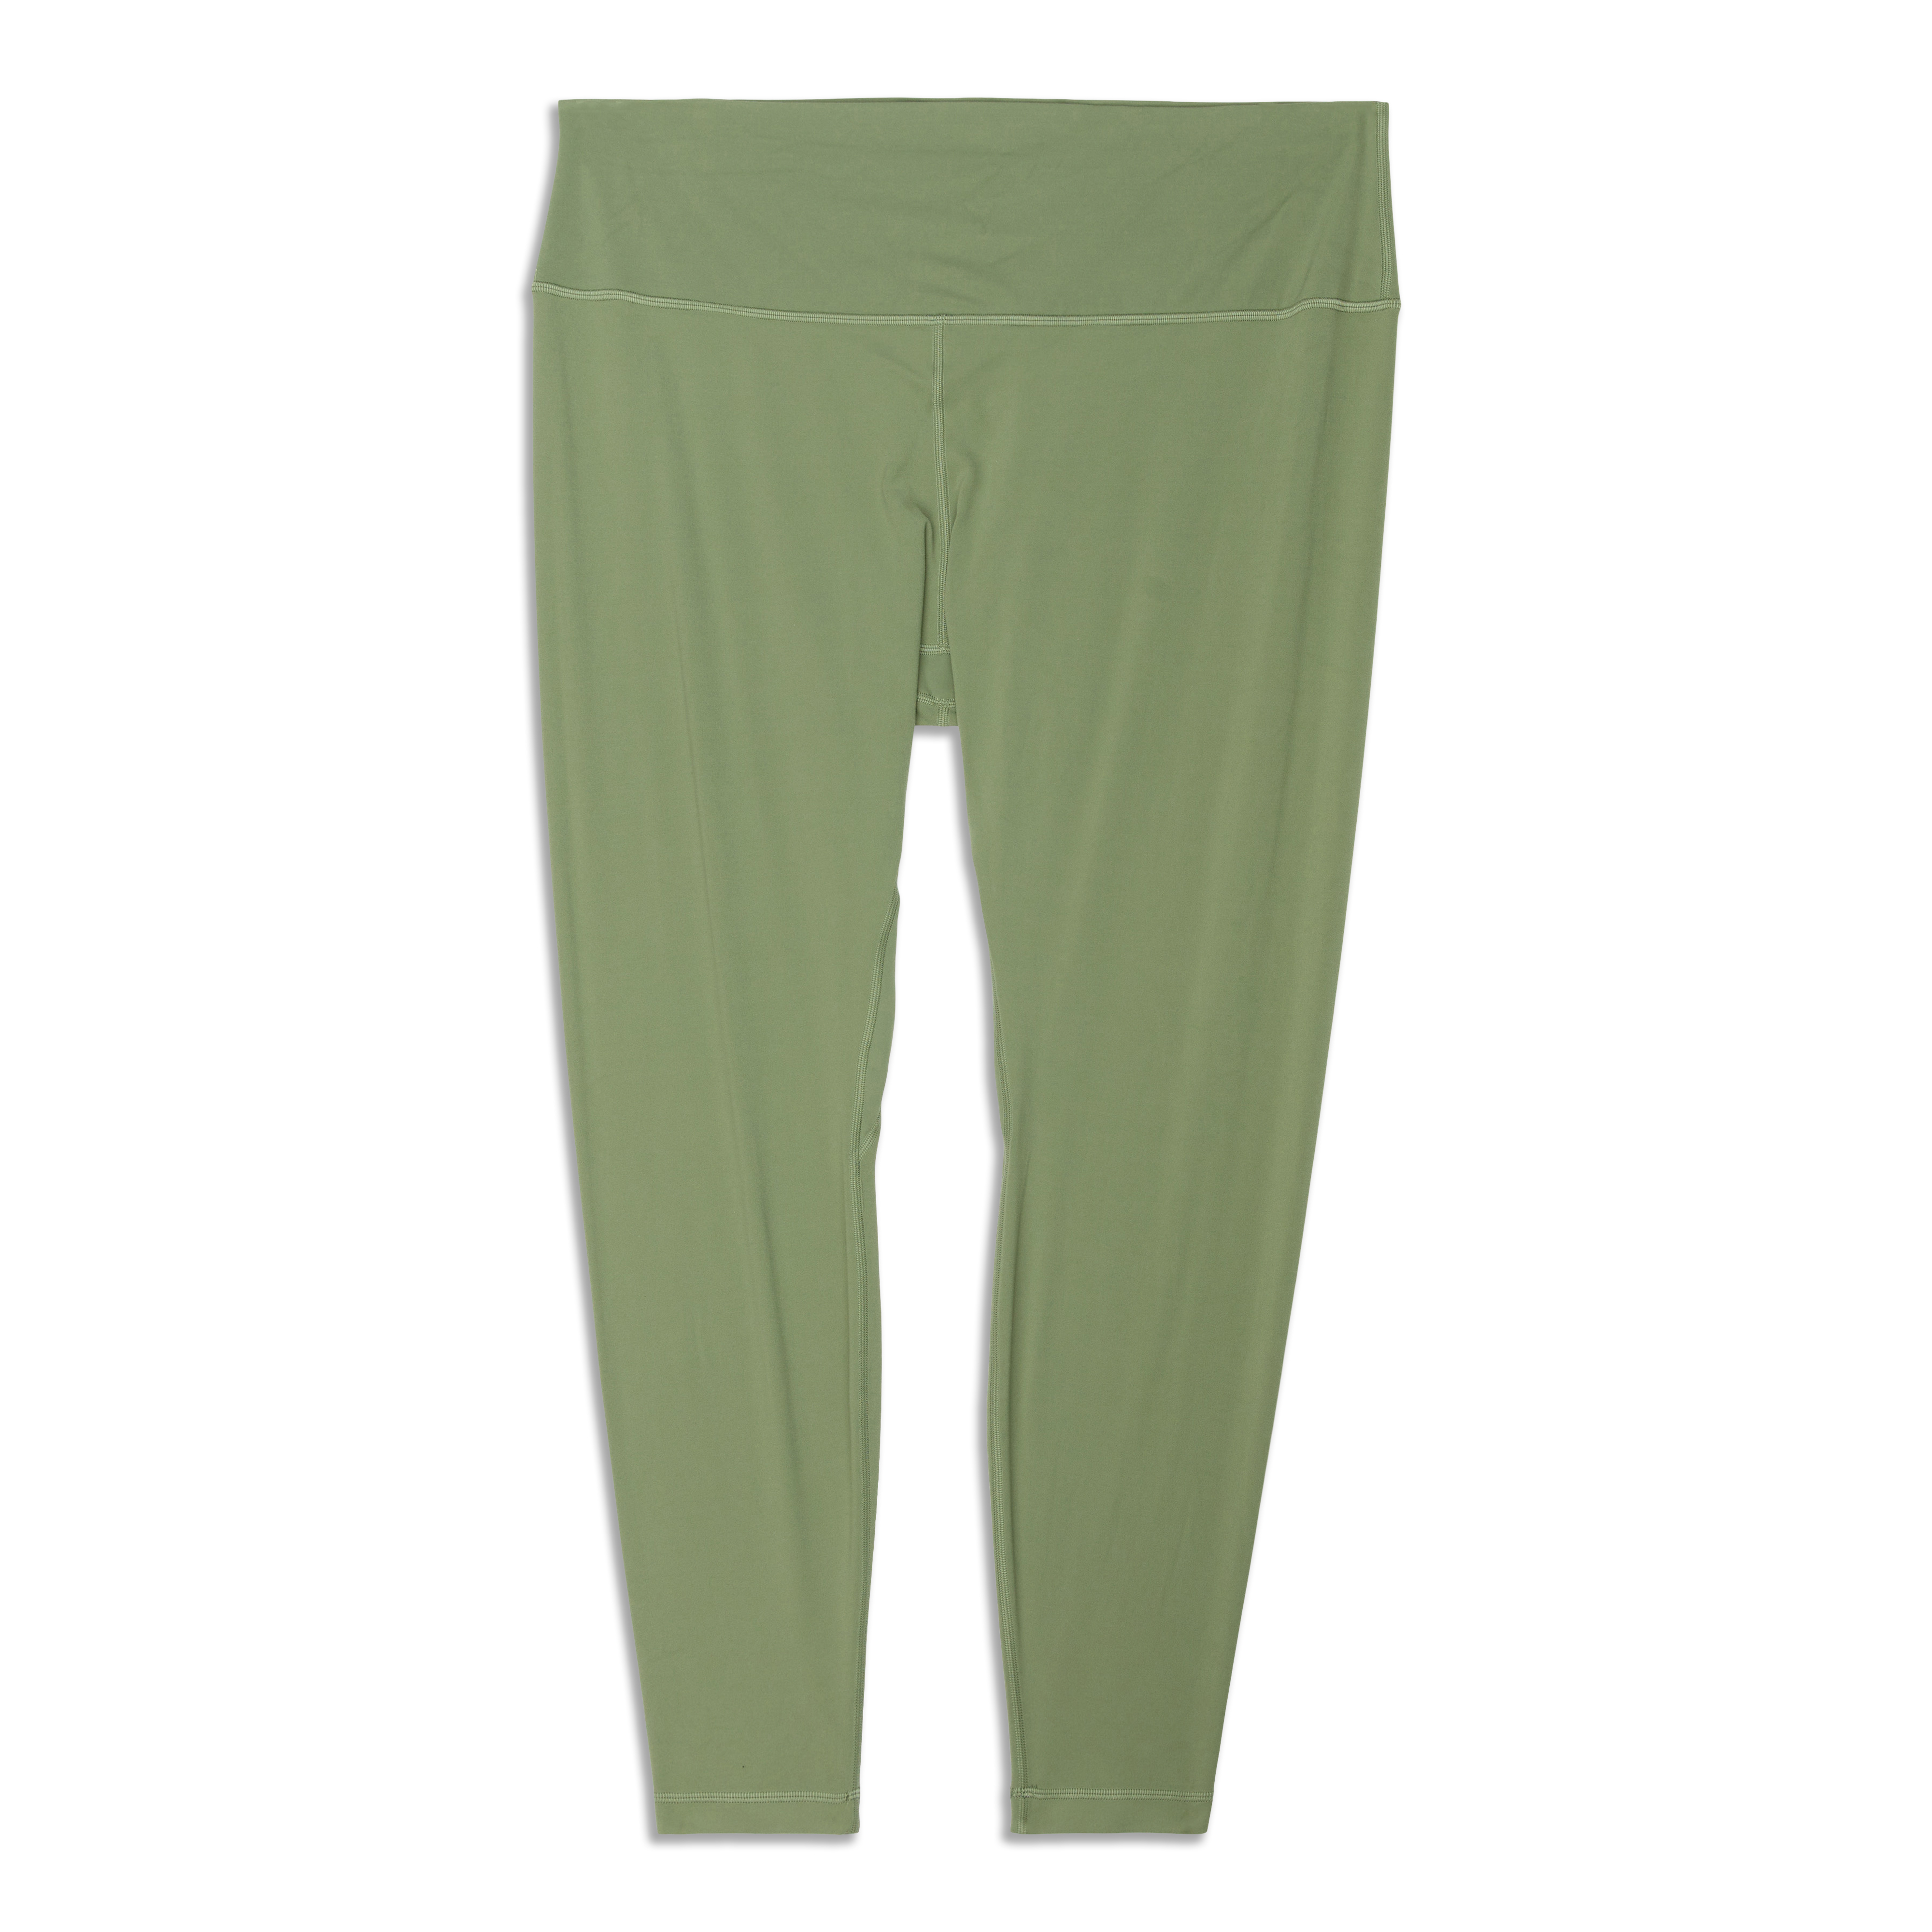 Lululemon NWT Align High-Rise Pant 28 - Bronze Green Size 4